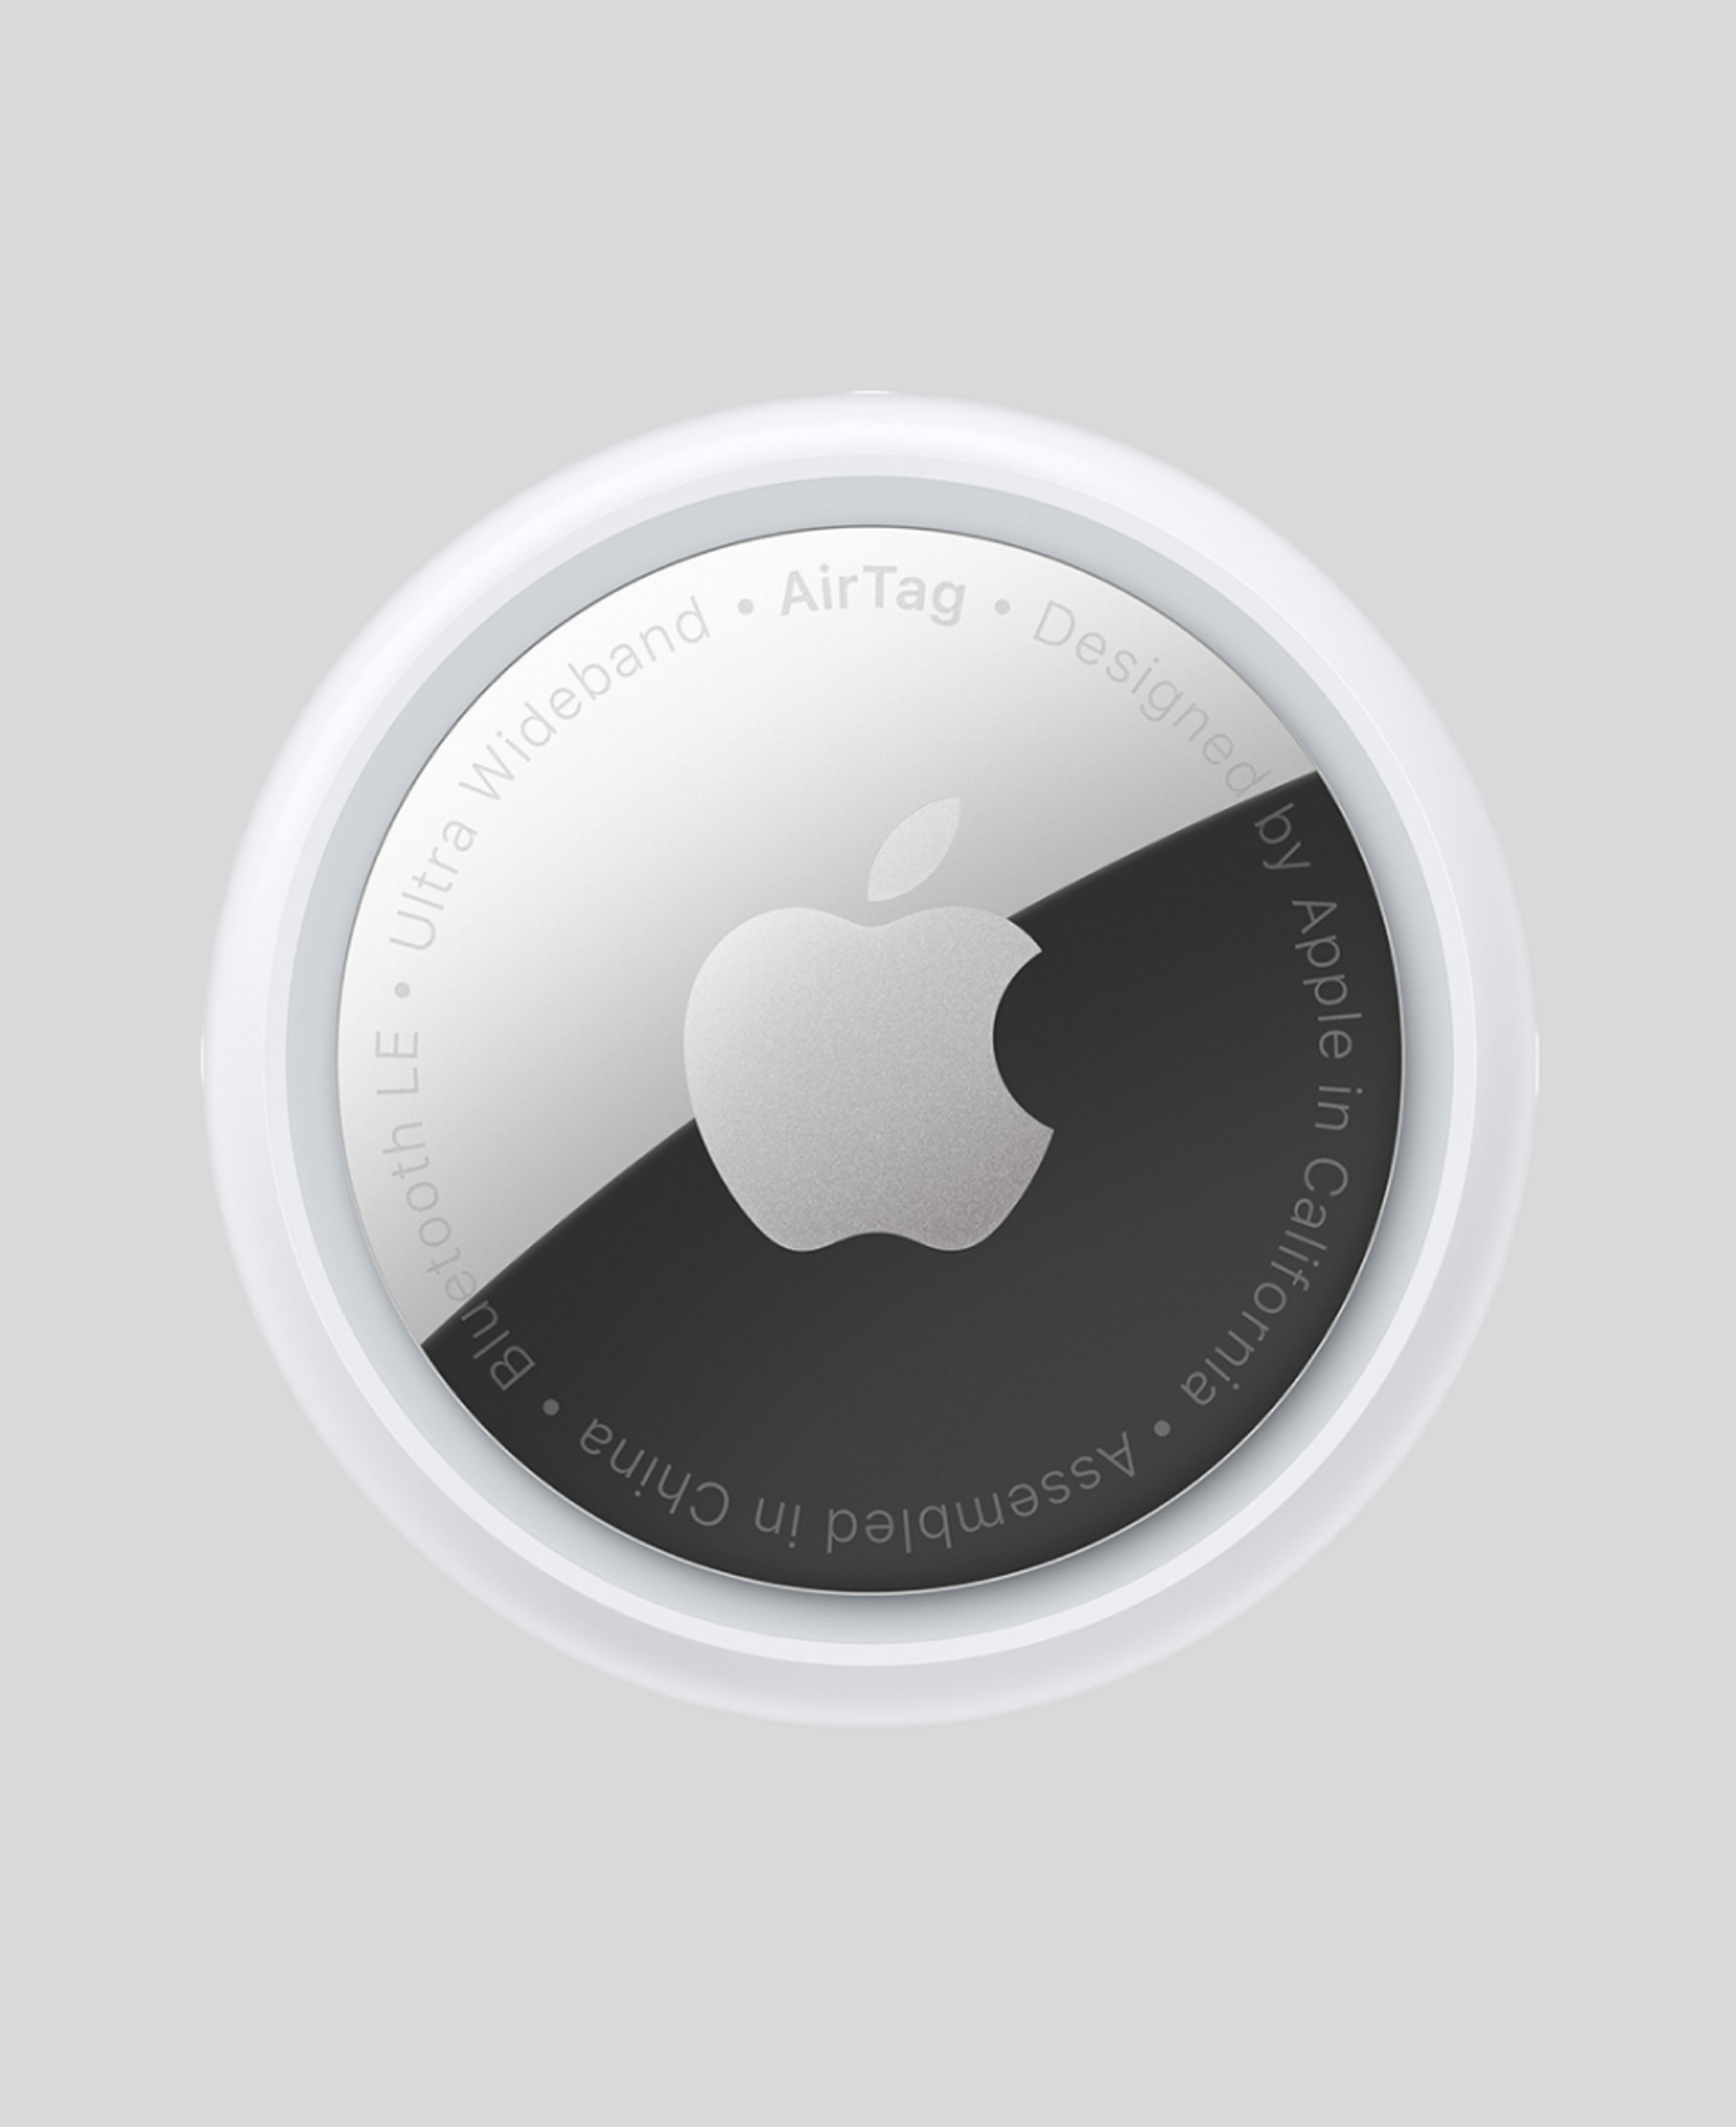 Поисковый трекер Apple AirTag